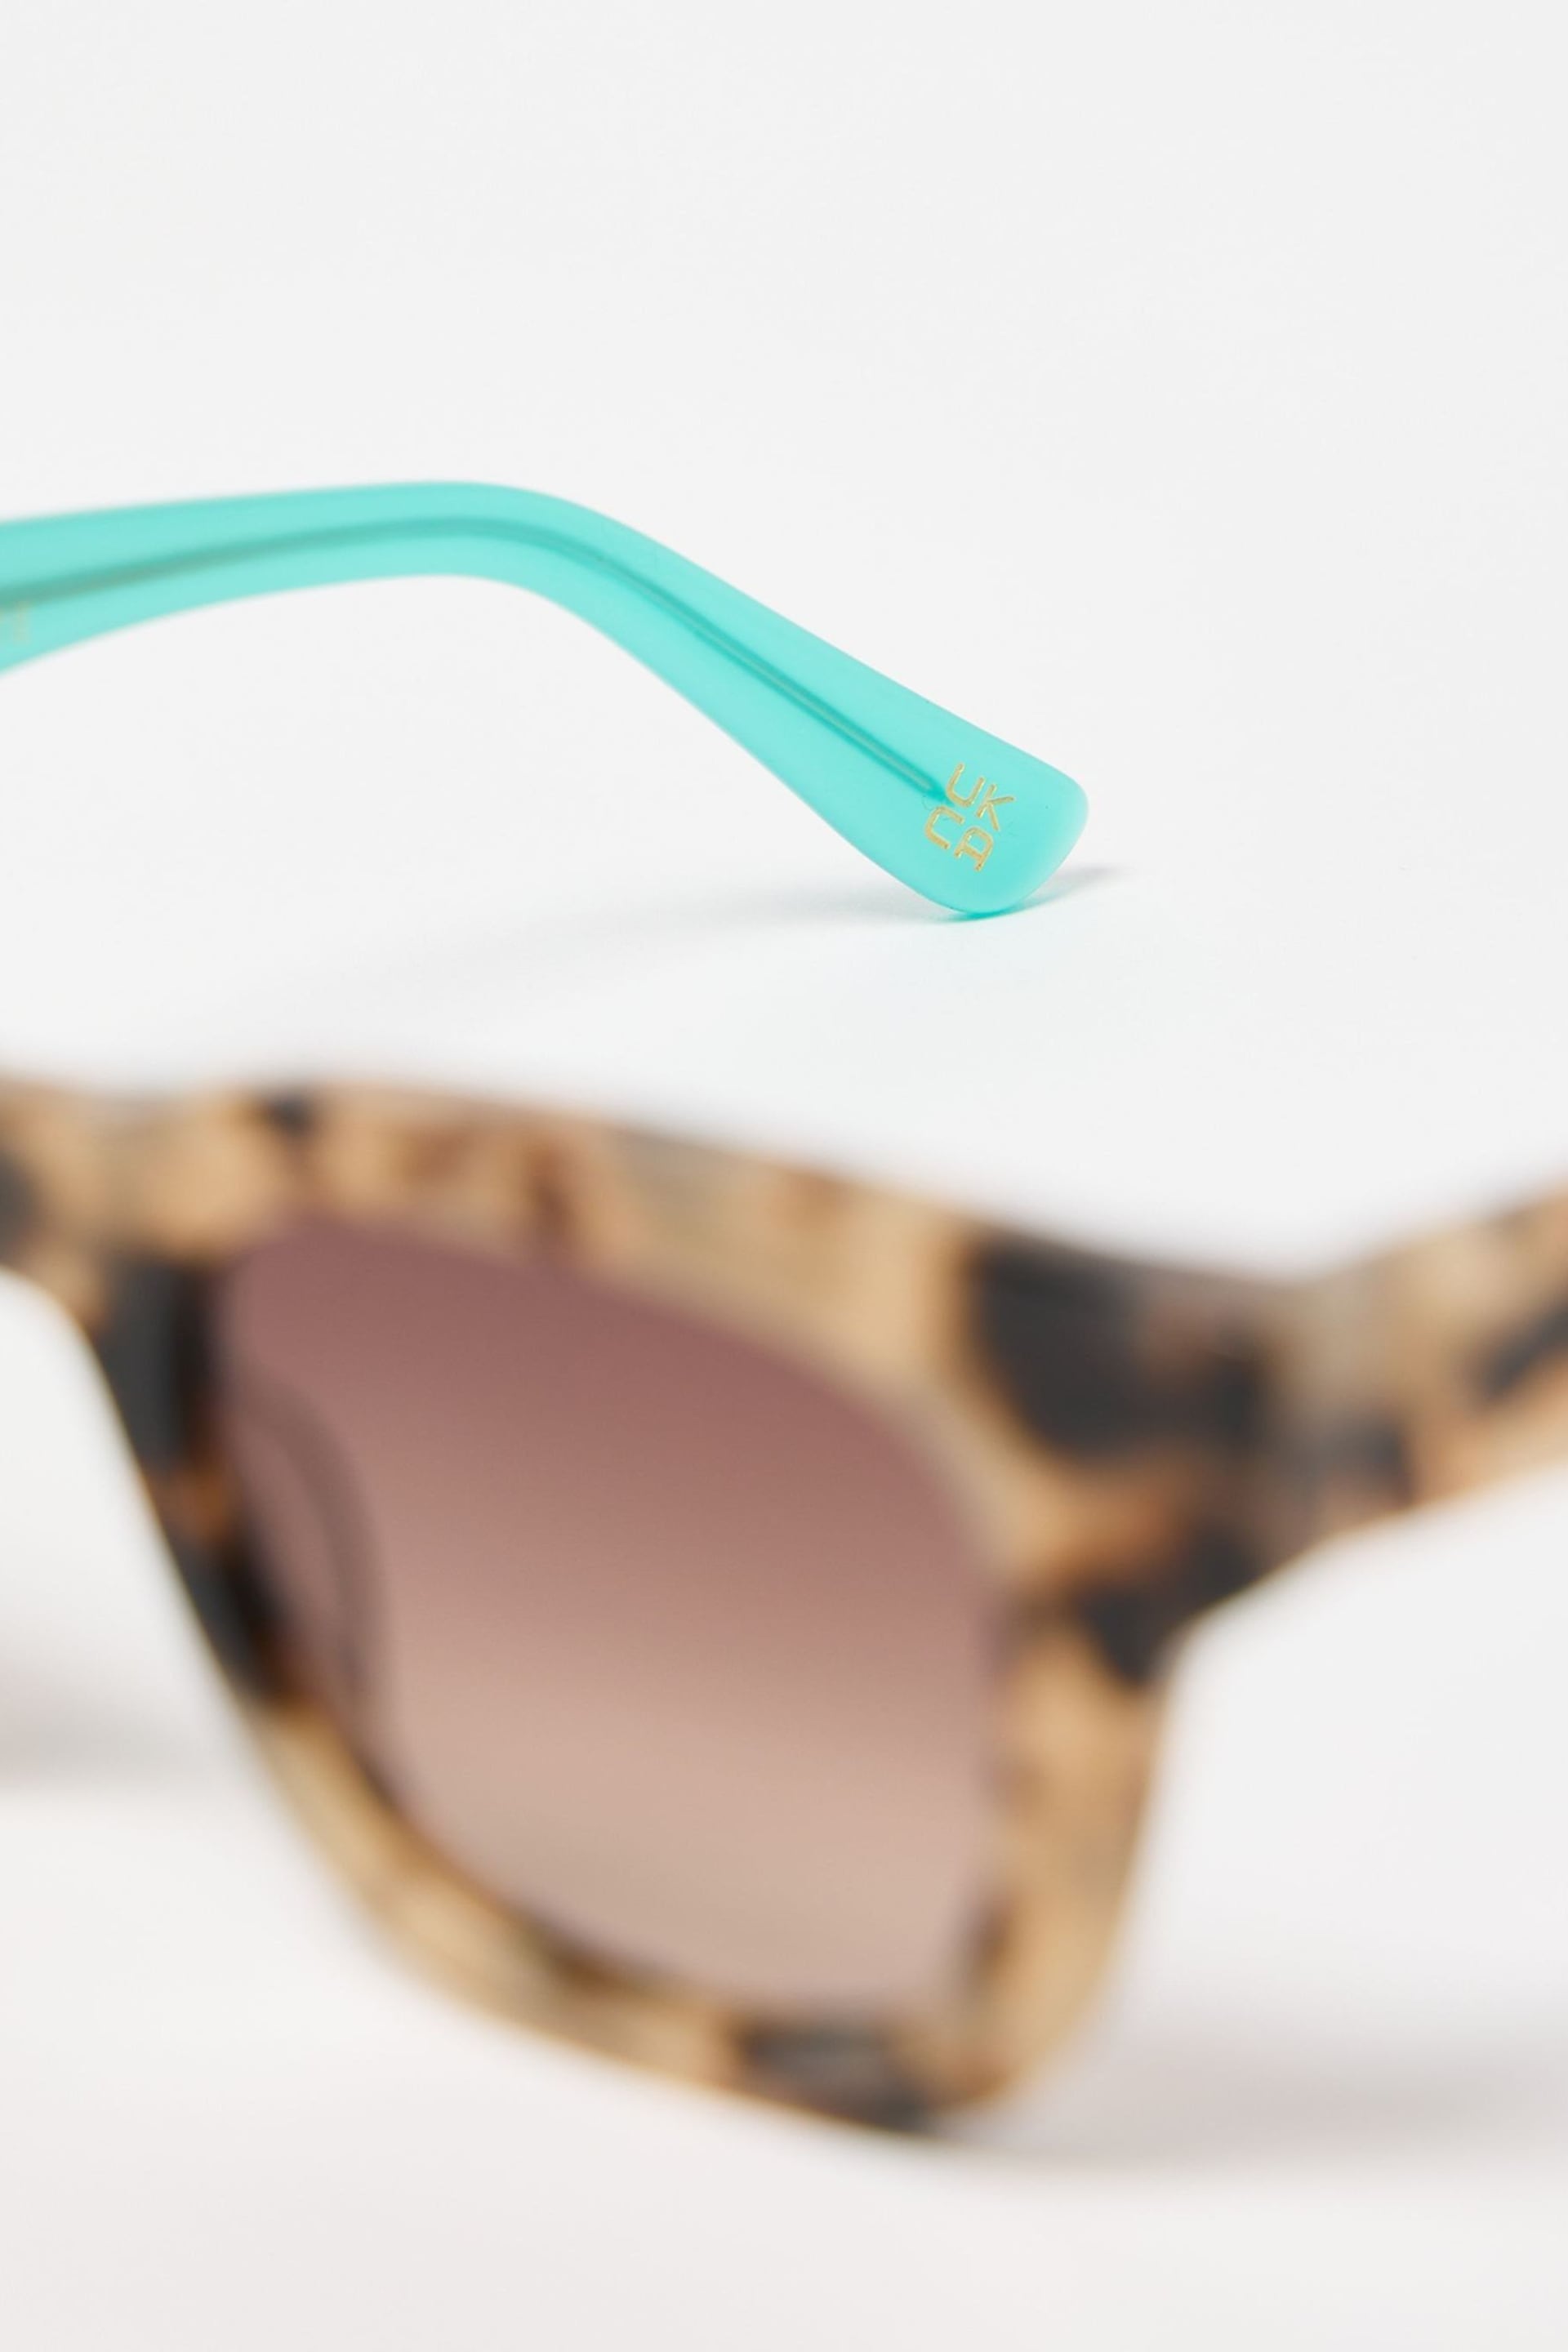 Oliver Bonas Green Faux Tortoiseshell Aqua Square Acetate Sunglasses - Image 2 of 6